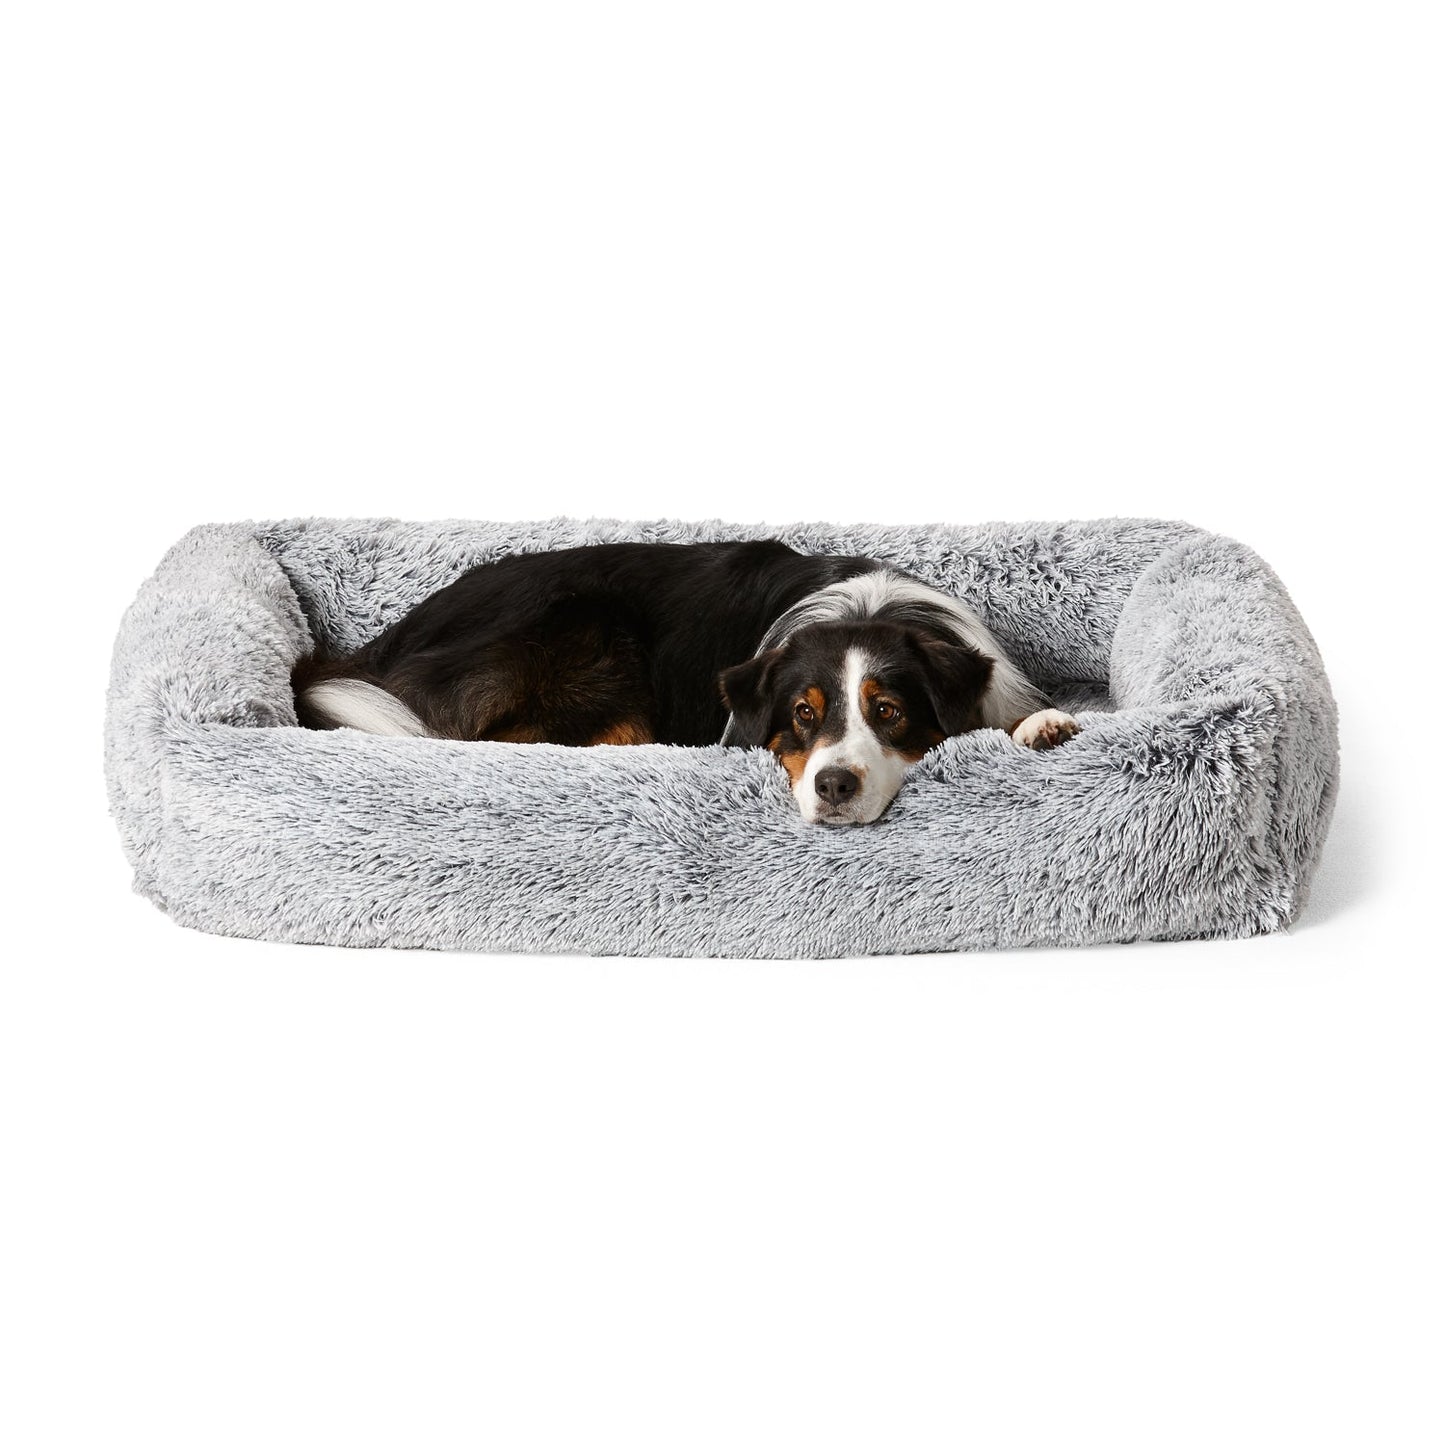 Snooza Snuggler Silver Fox Dog Bed